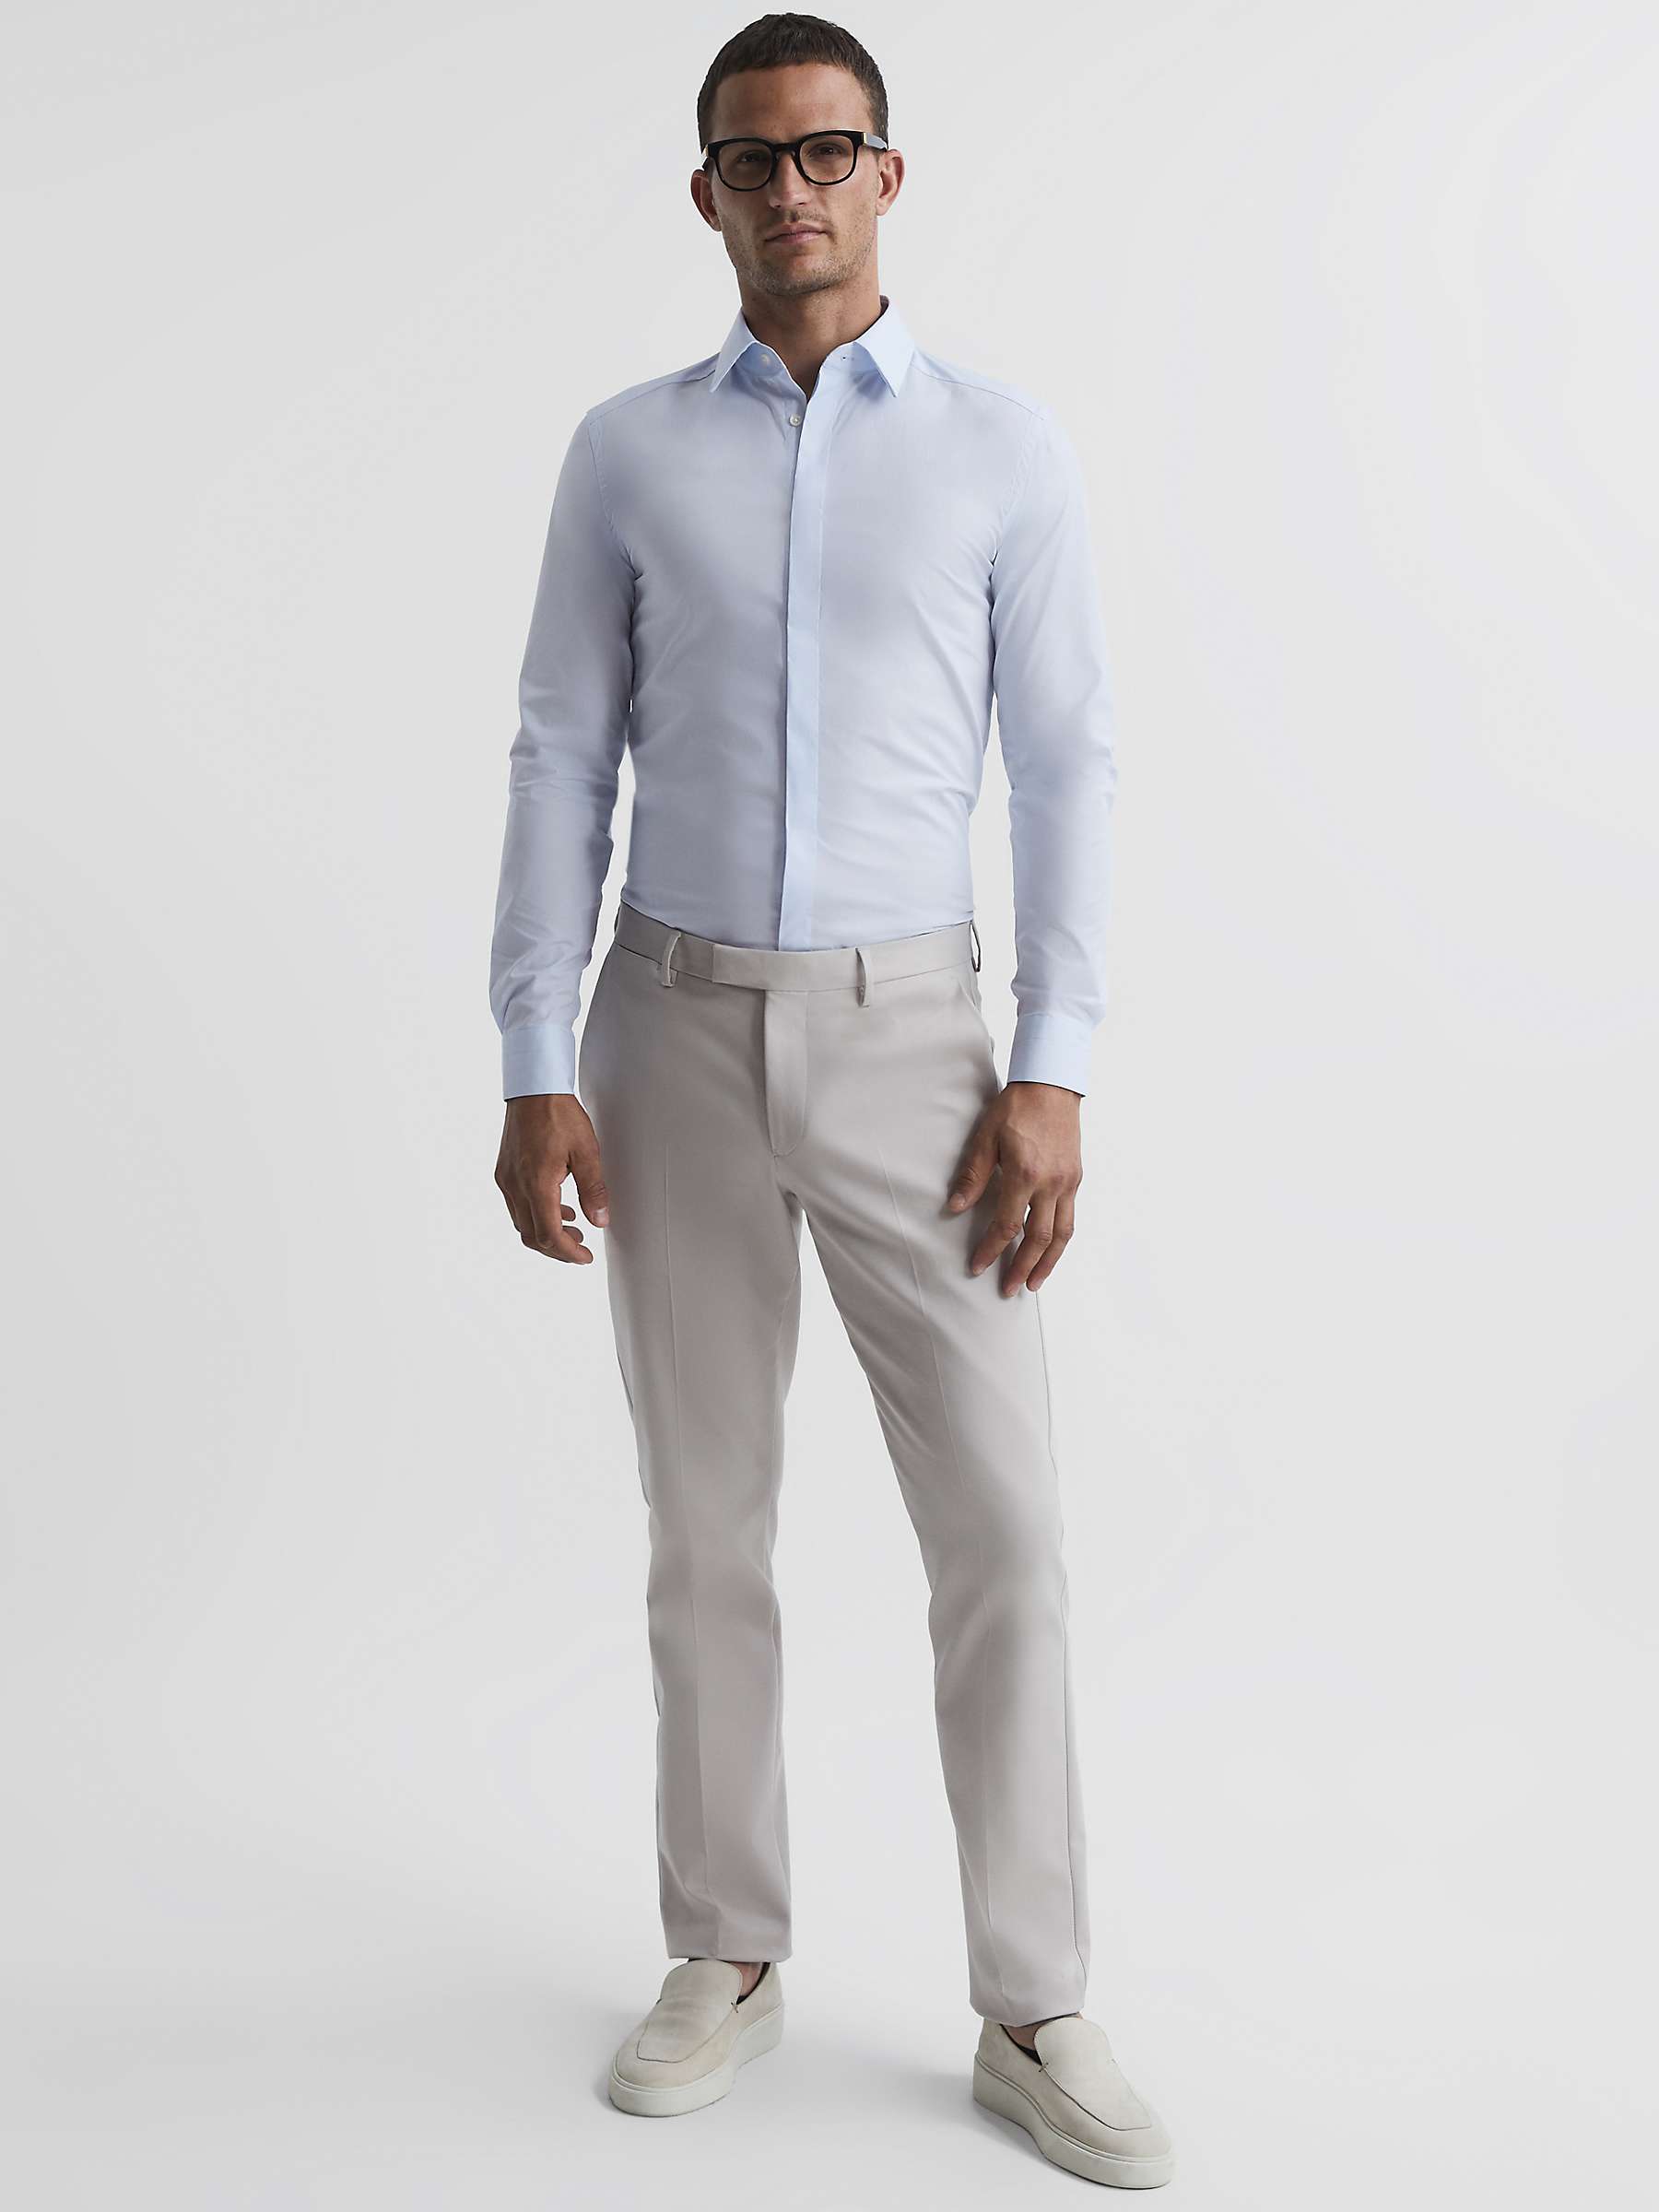 Buy Reiss Kiana Long Sleeve Slim Fit Shirt, Blue Online at johnlewis.com